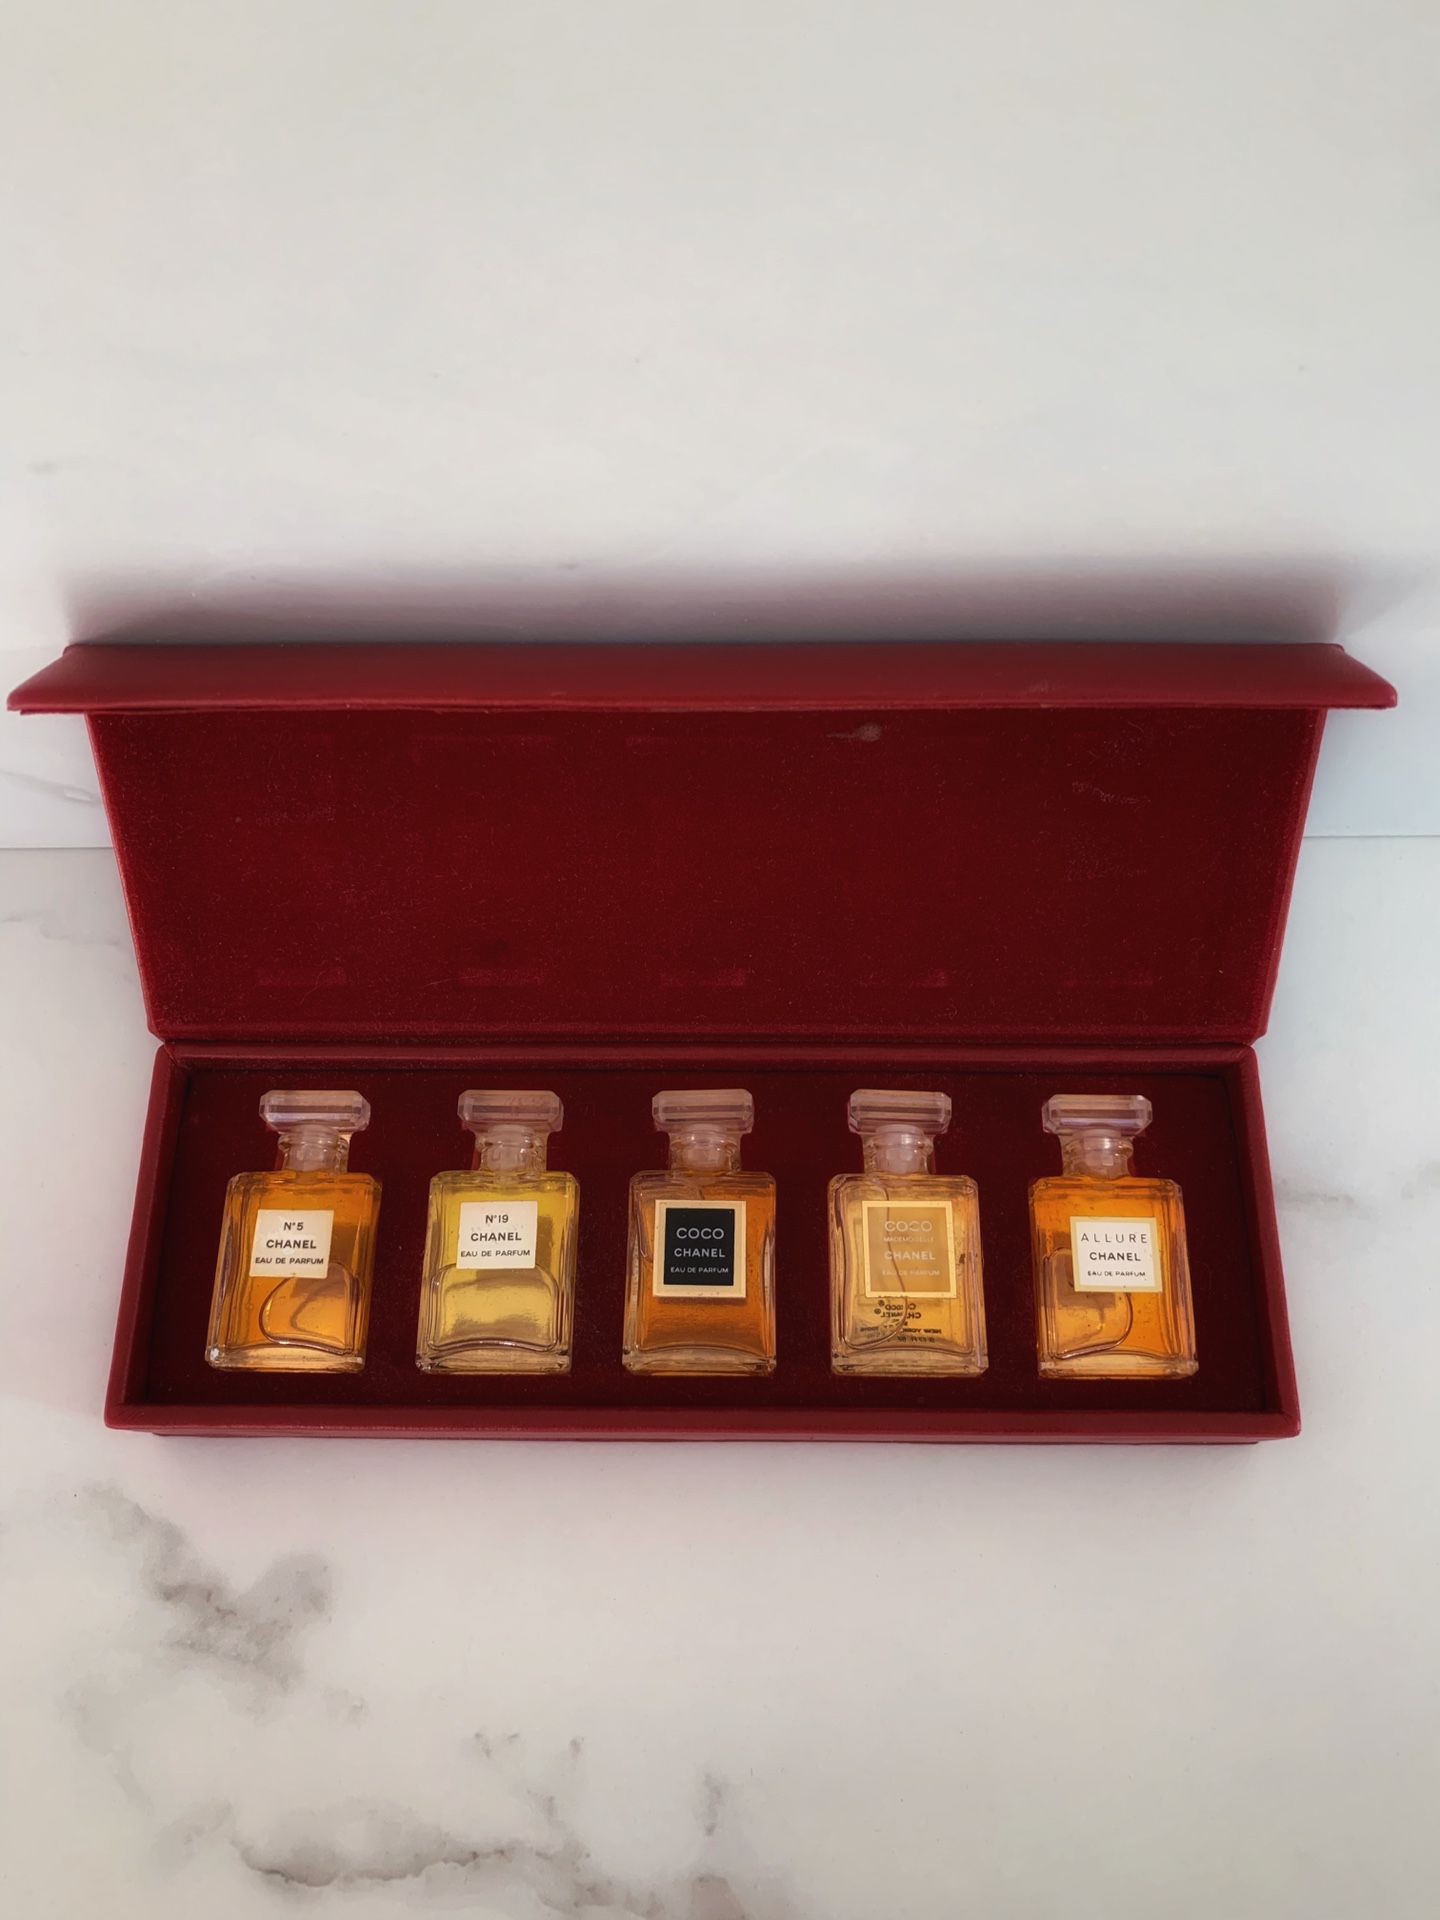 Vintage Chanel mini perfume set